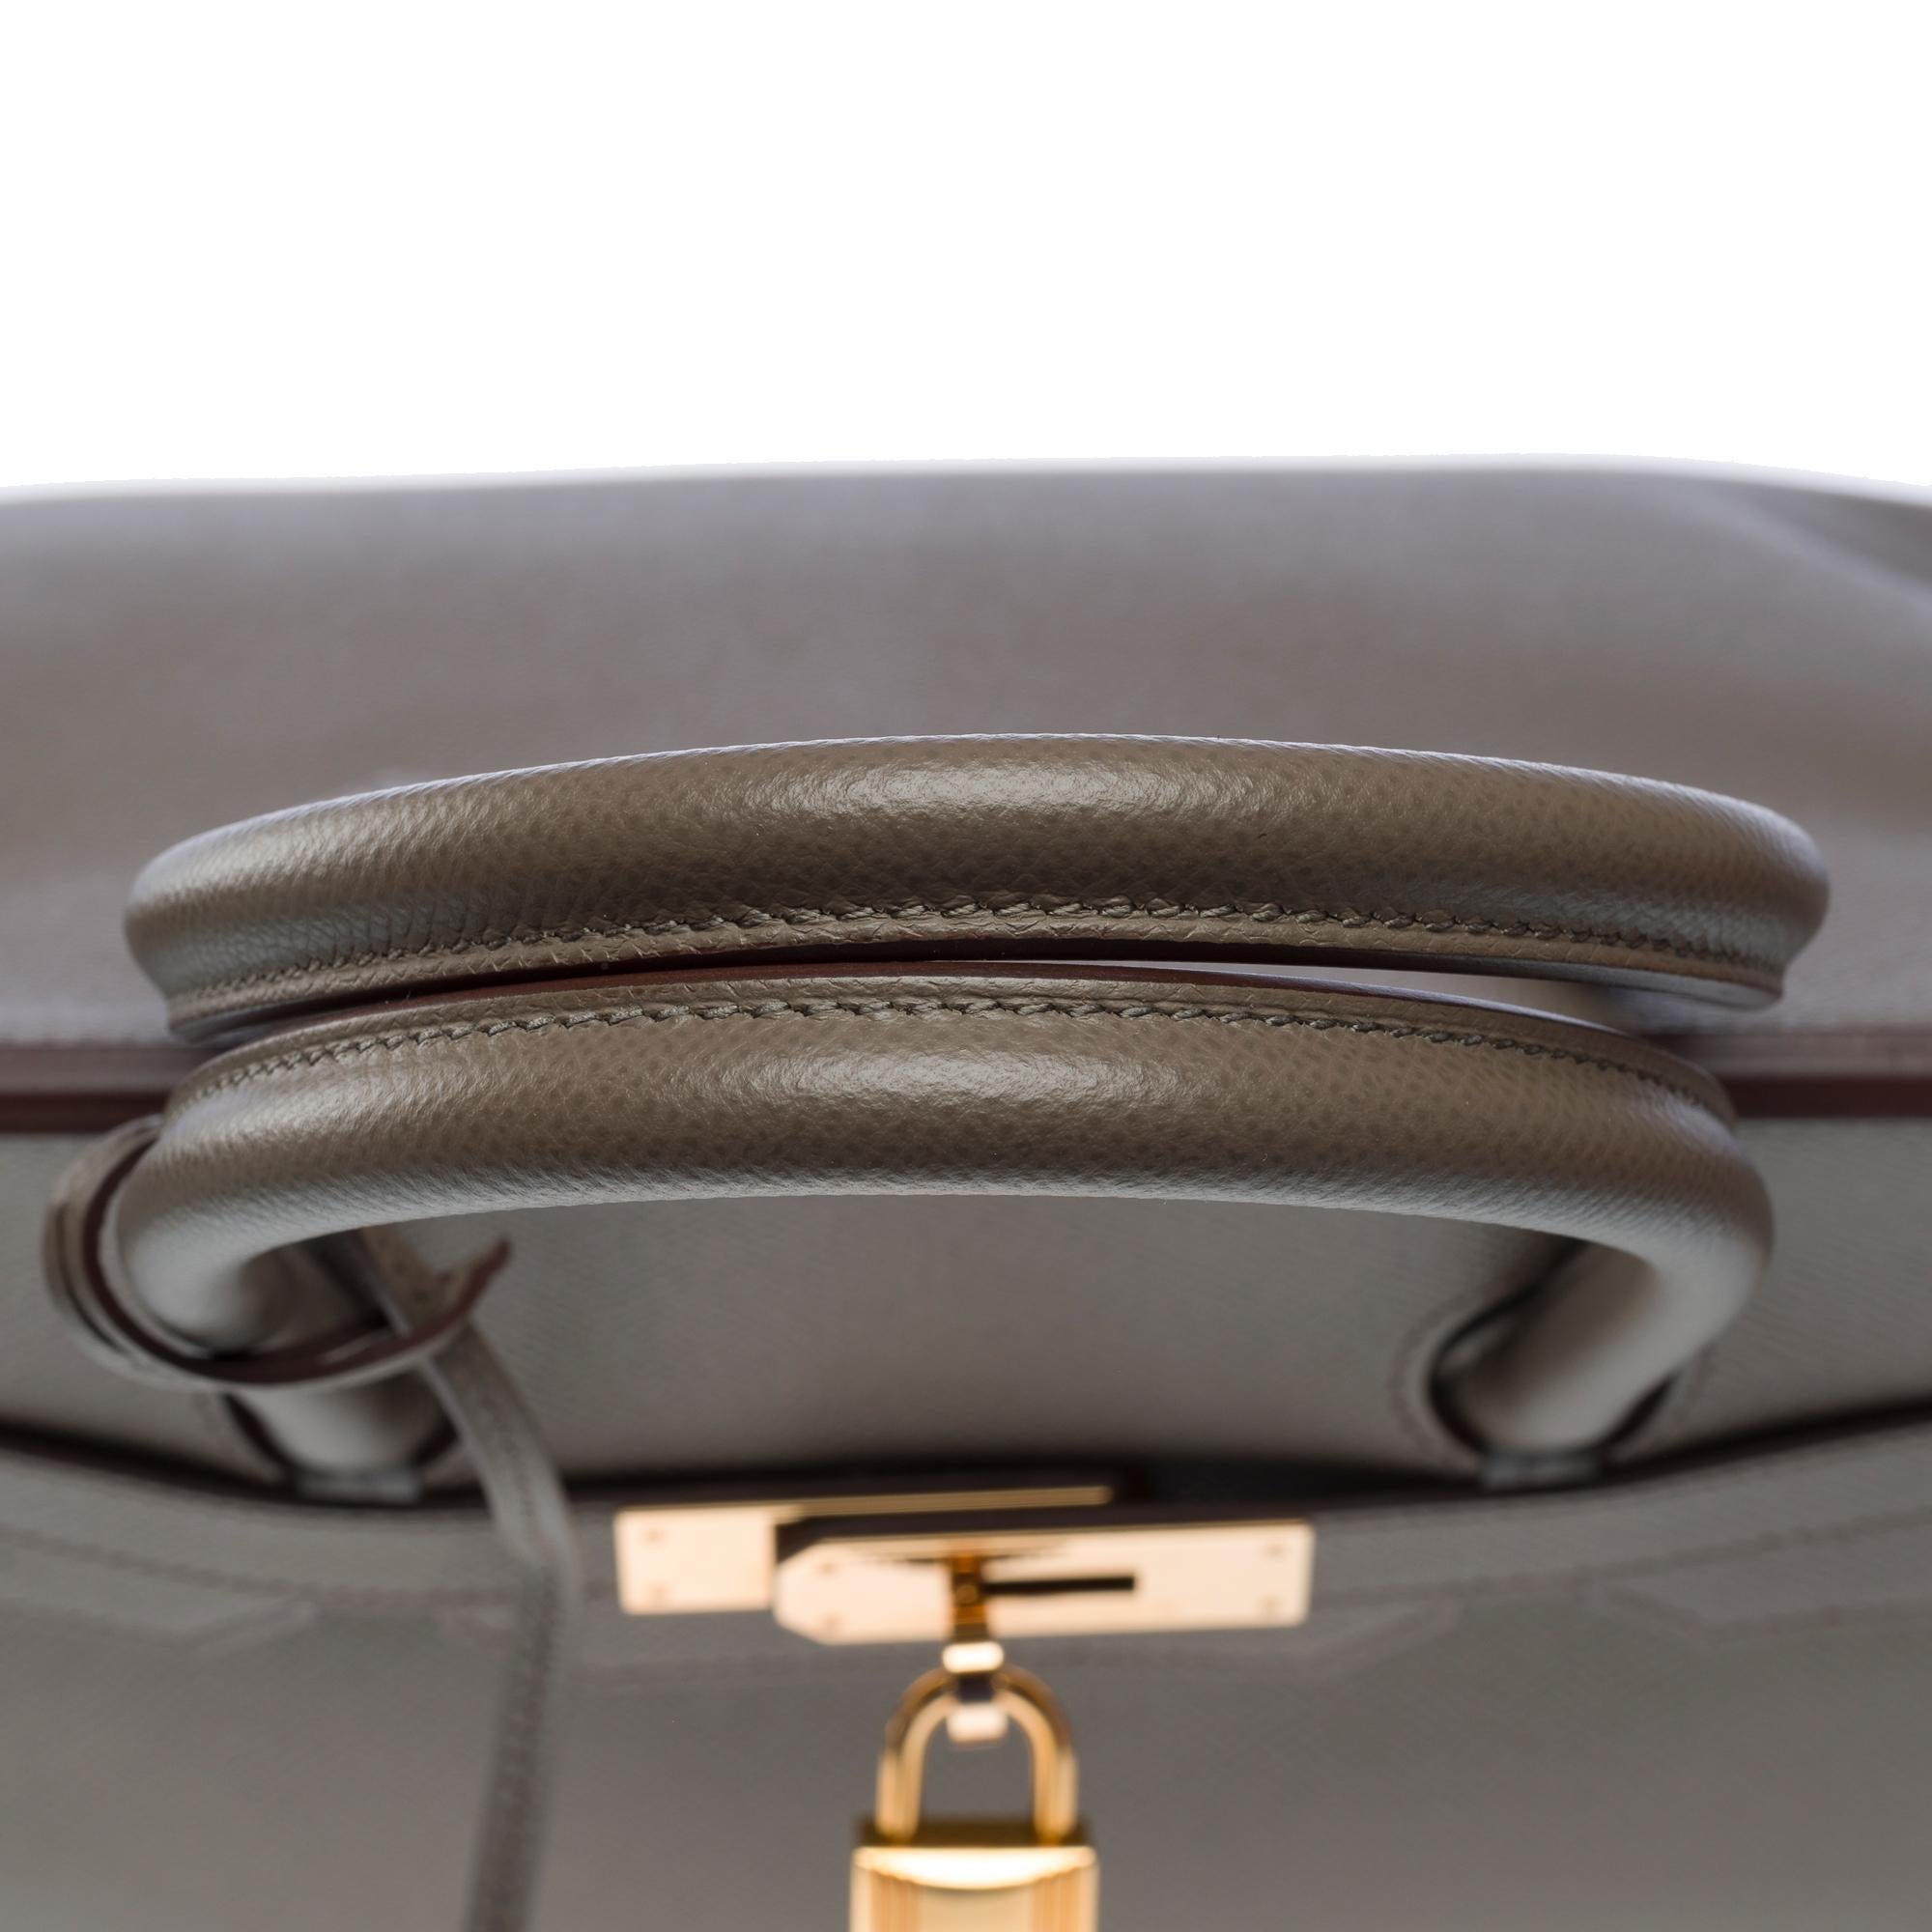 Stunning Hermès Birkin 35 handbag in etoupe Epsom leather, RGHW For Sale 7